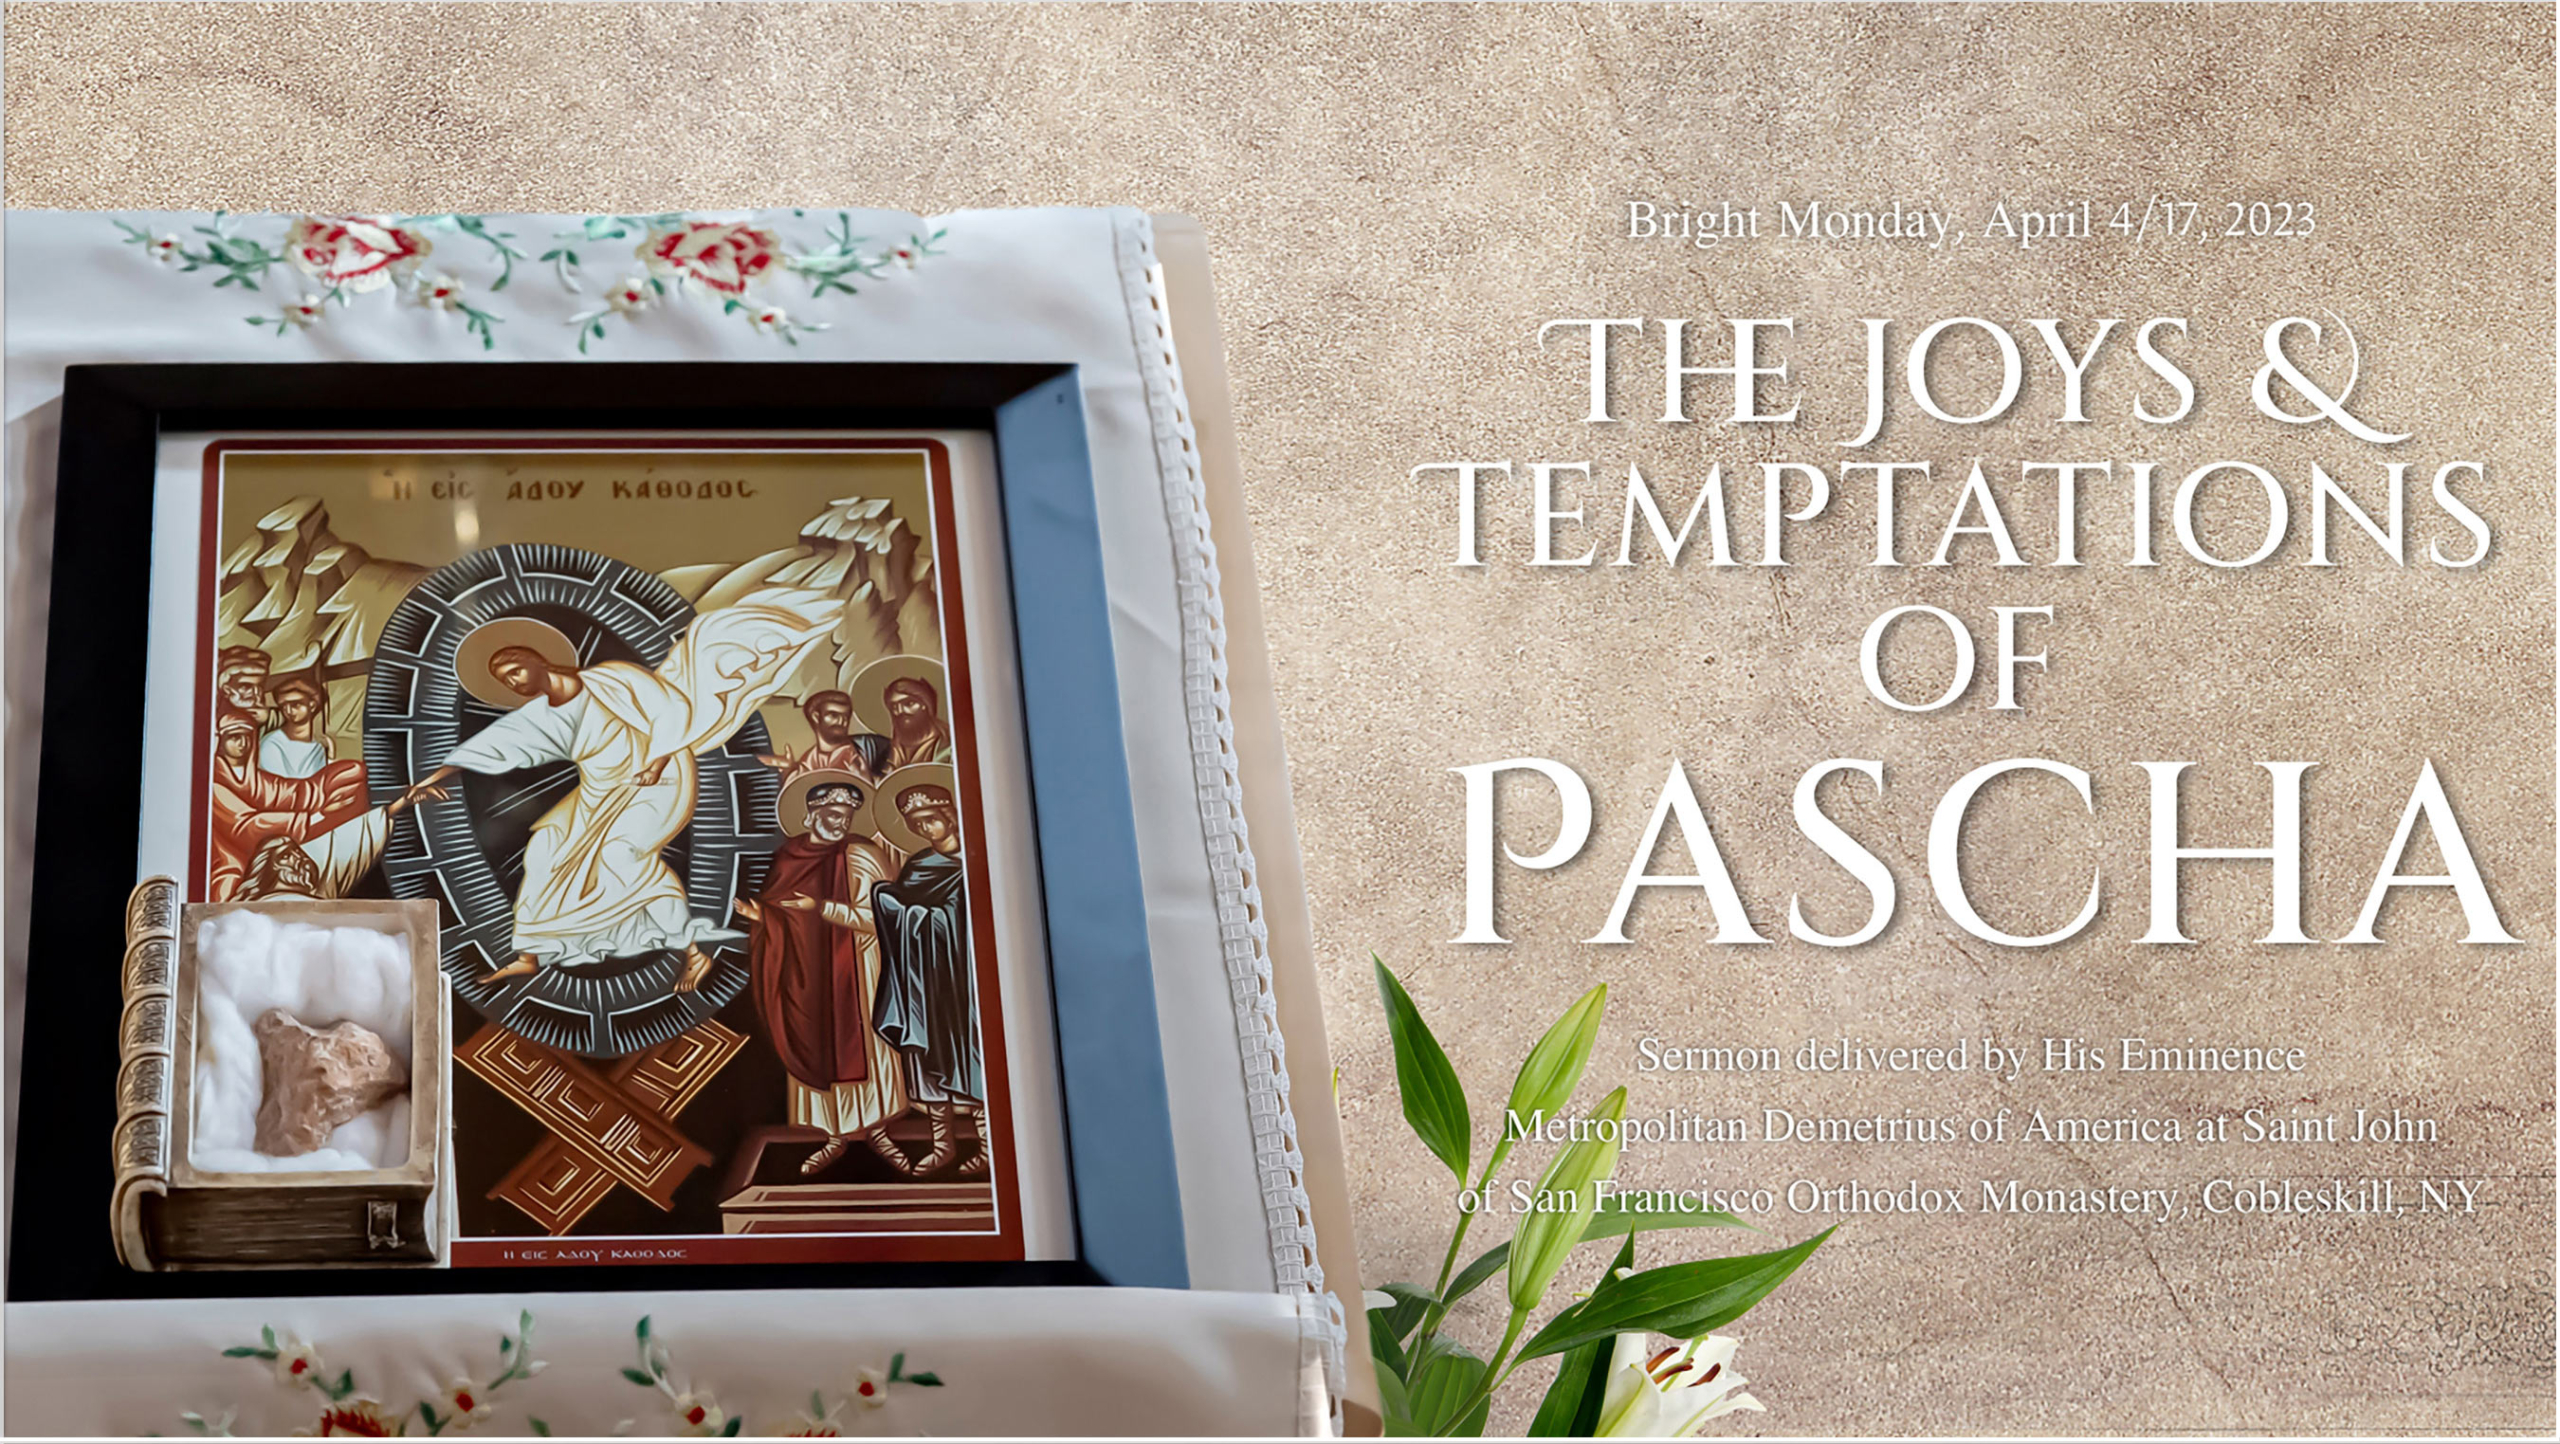 The Joys & Temptations of Pascha - Sermon by His Eminence Metropolitan Demetrius image